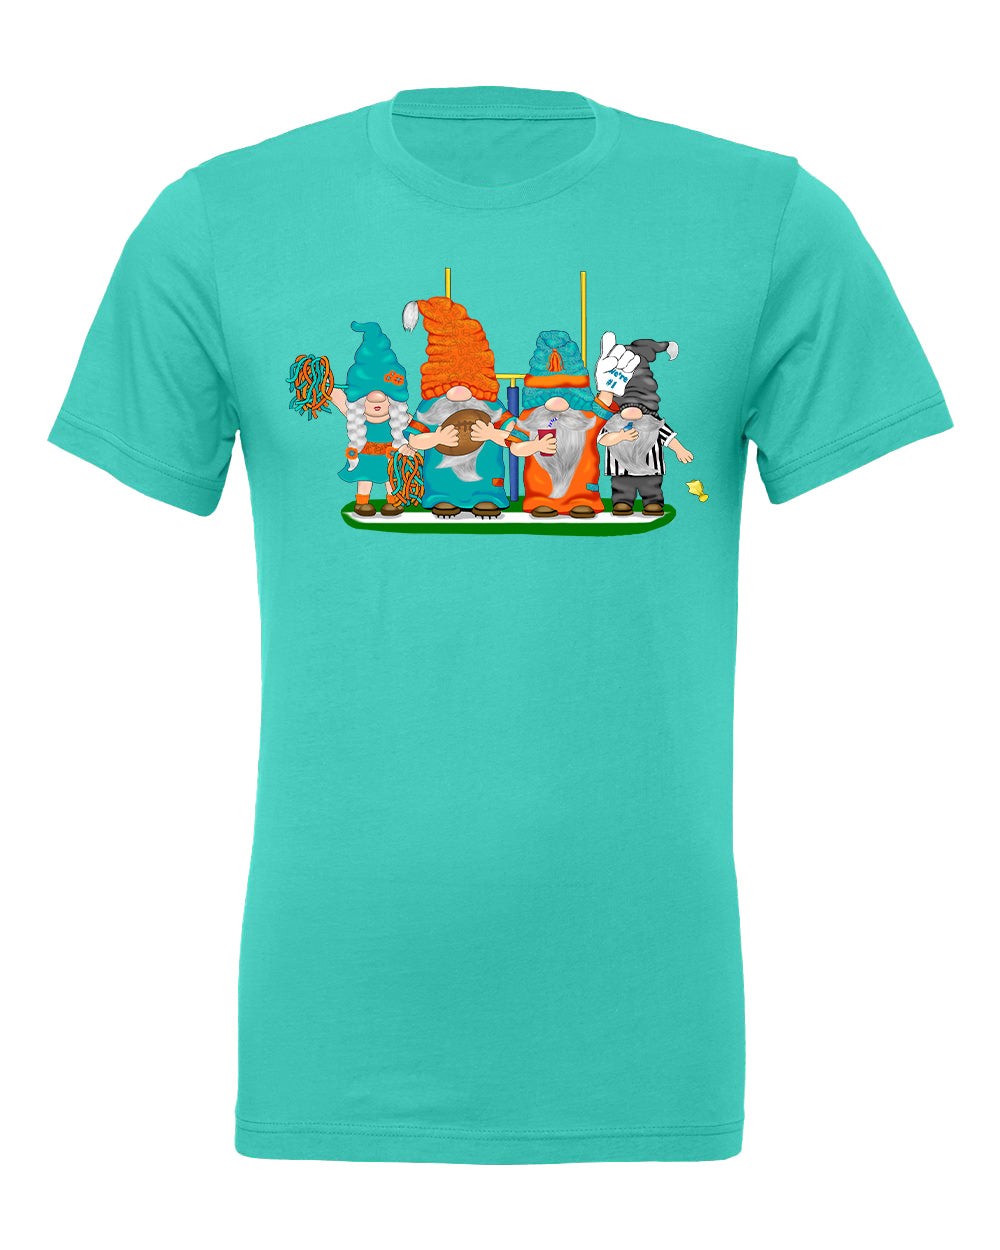 Aqua & Orange Football Gnomes on Men's T-shirt (similar to Miami)